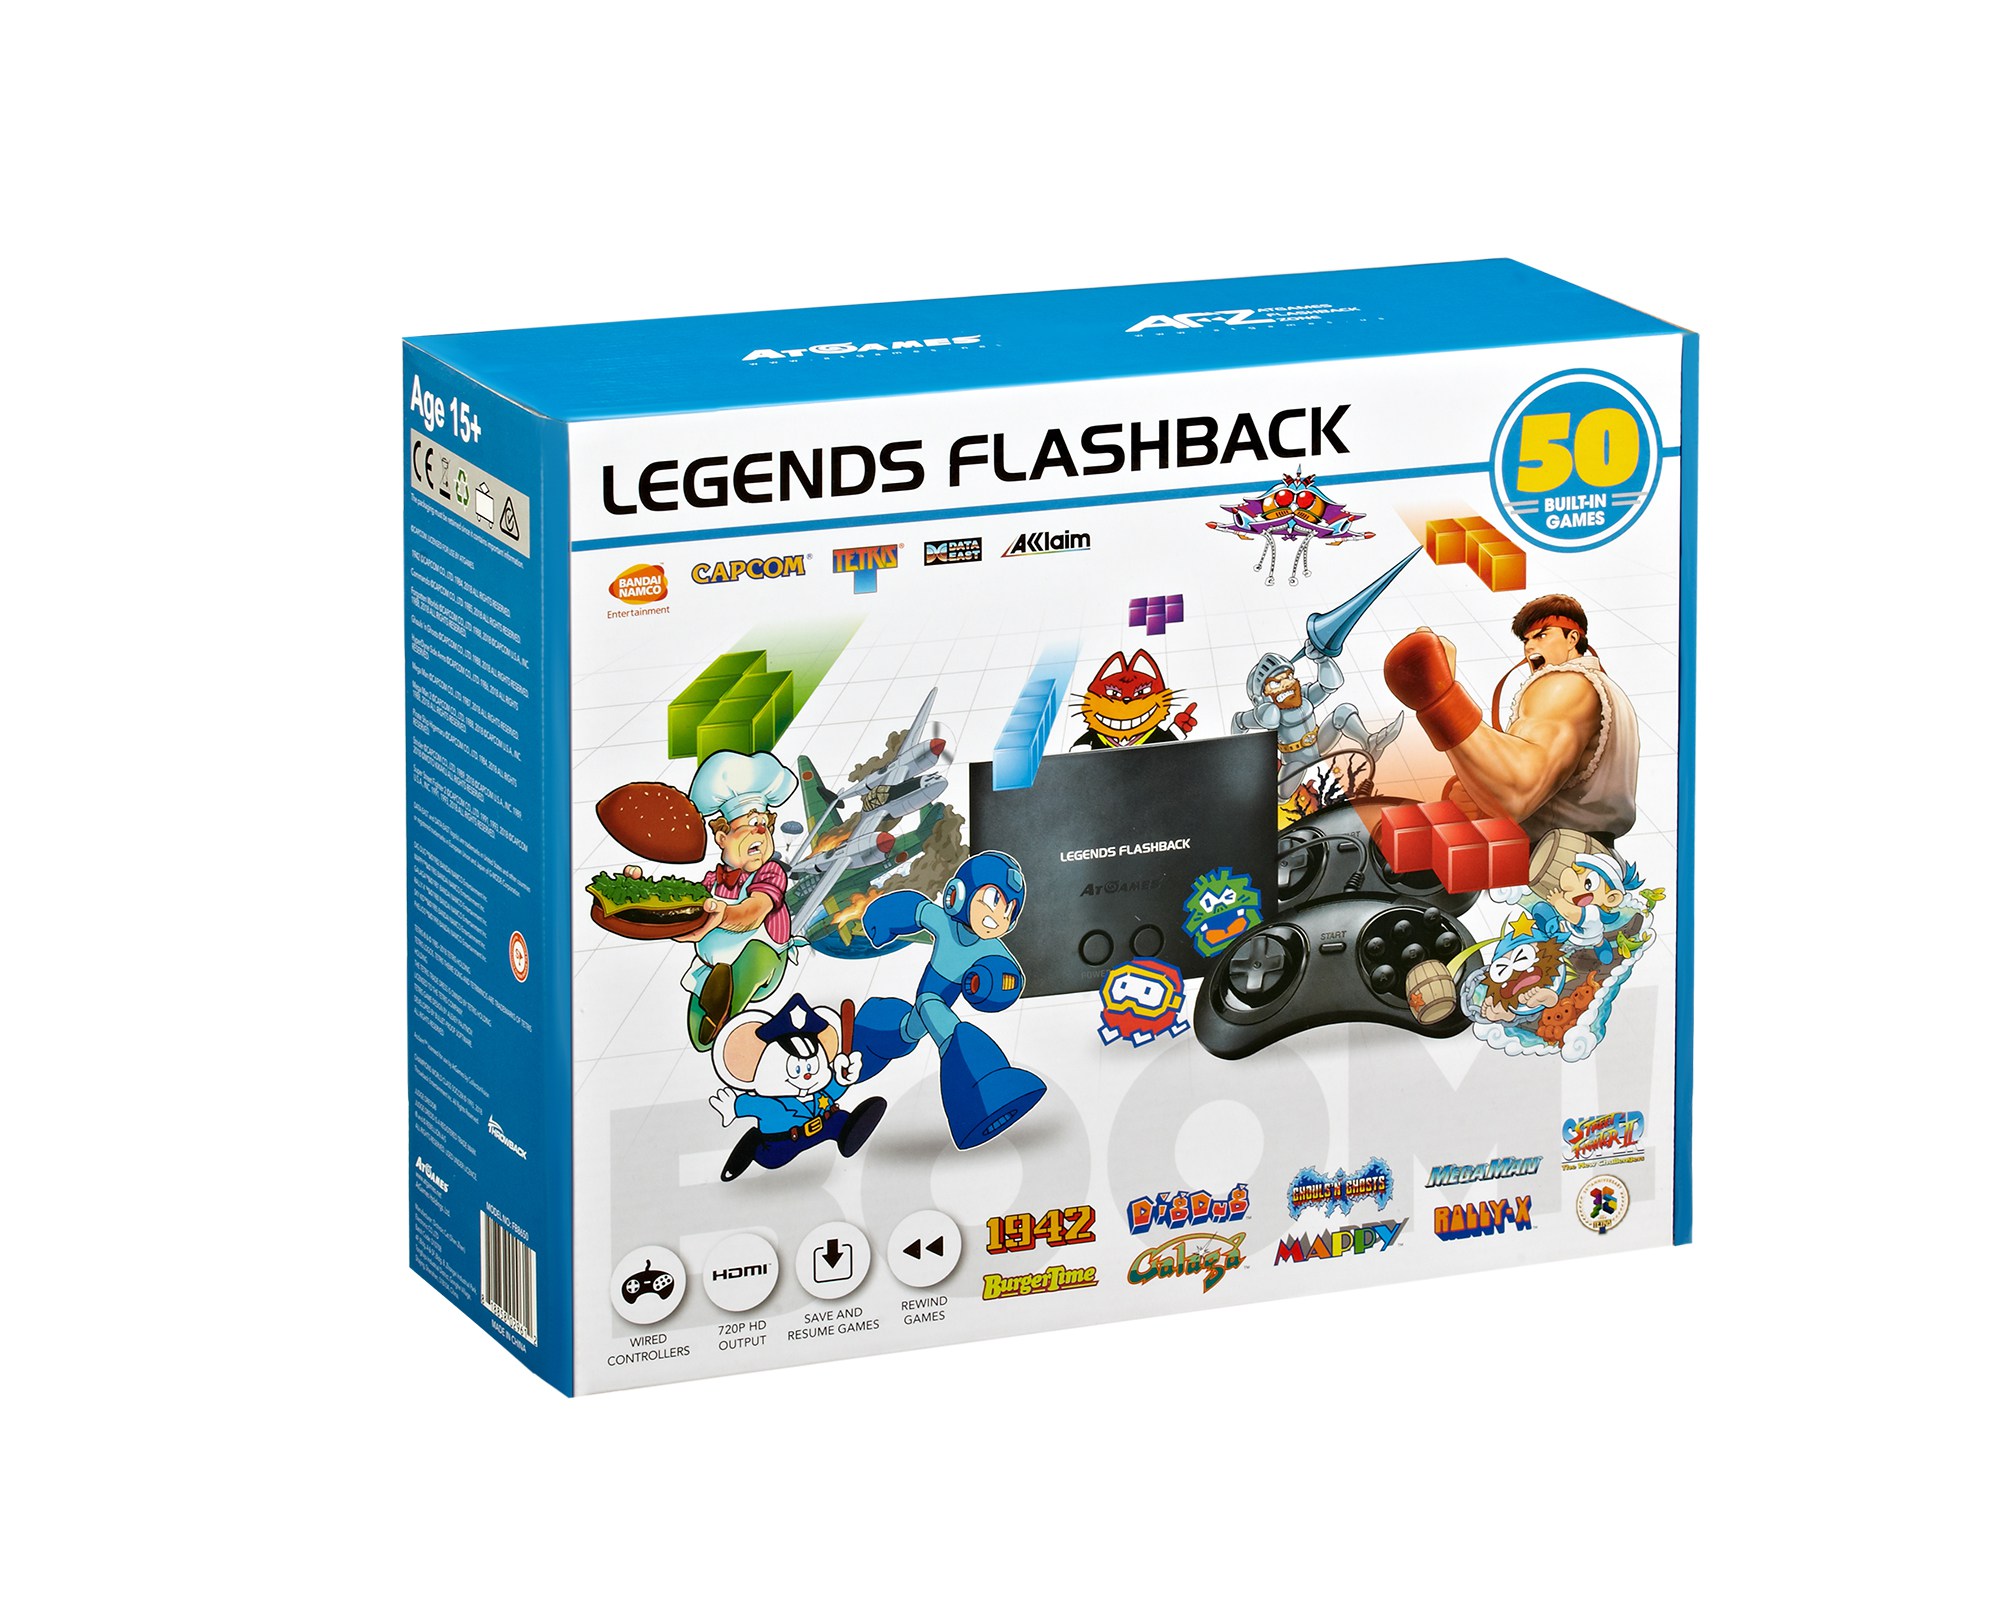 AtGames Announces Legends Flashback Console, 50 Arcade/Home Games